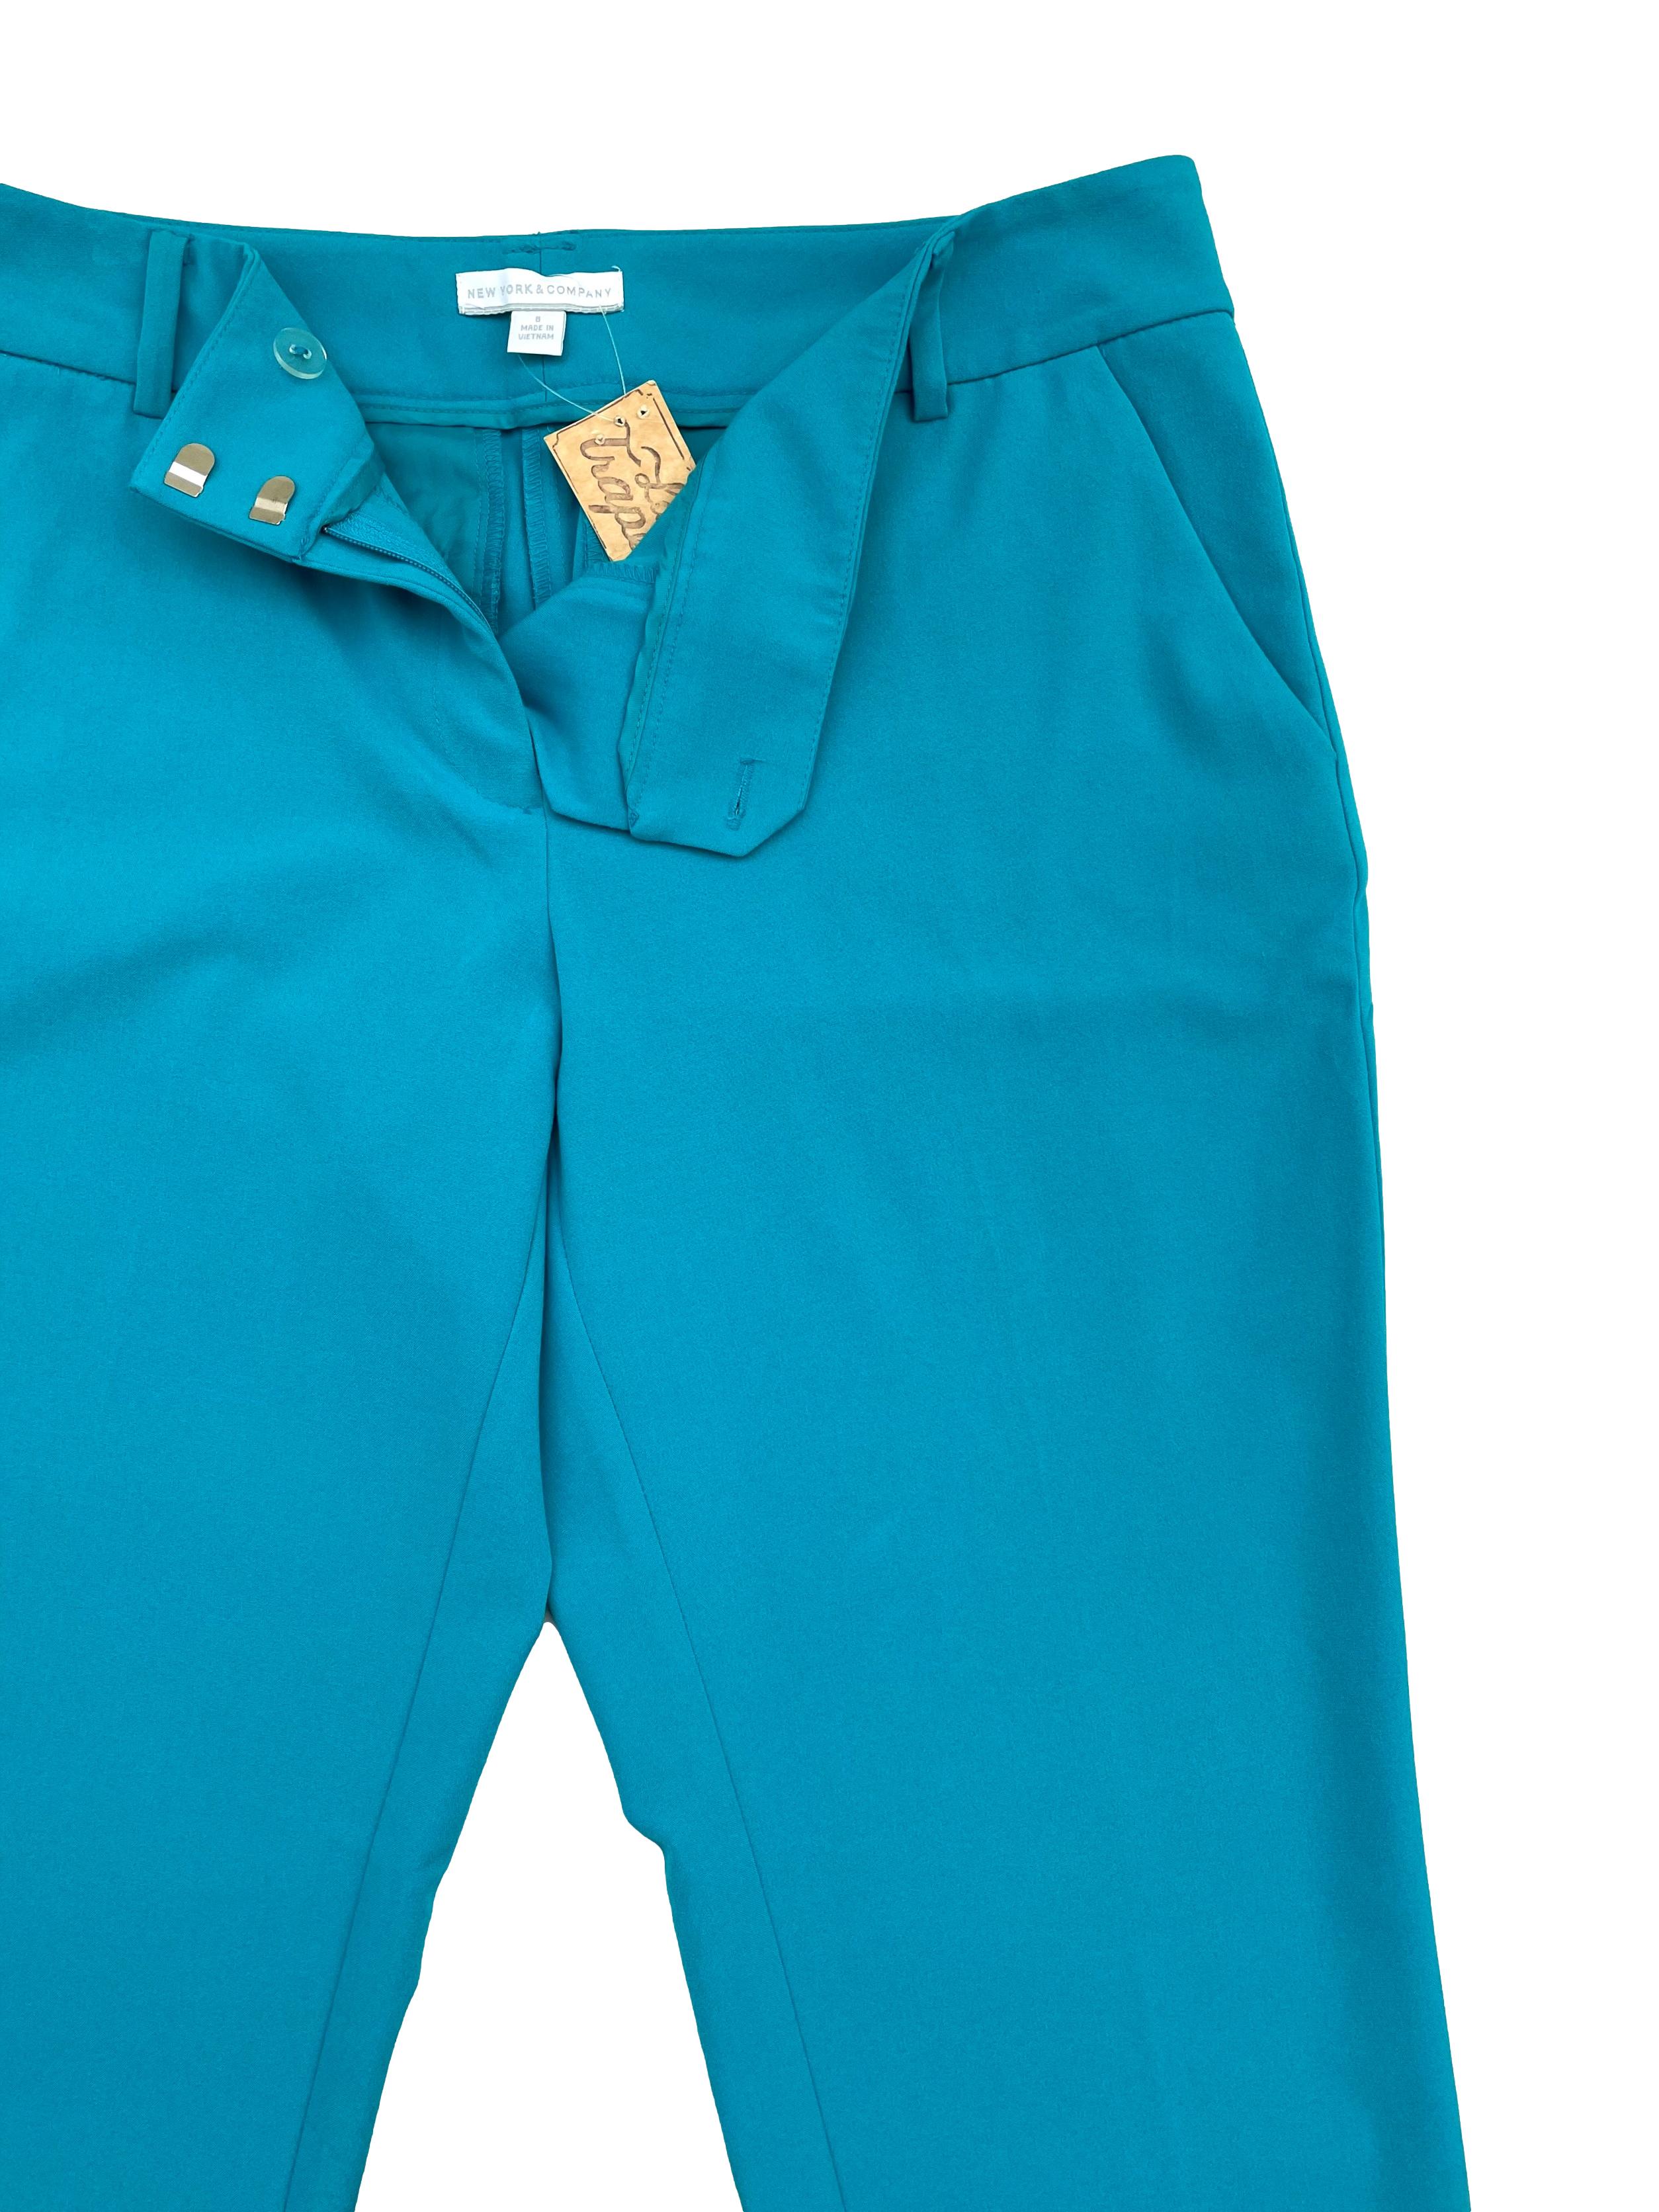 Pantalón NYC turquesa estilo formal, tiro medio y corte slim. Cintura 80cm Largo 89cm